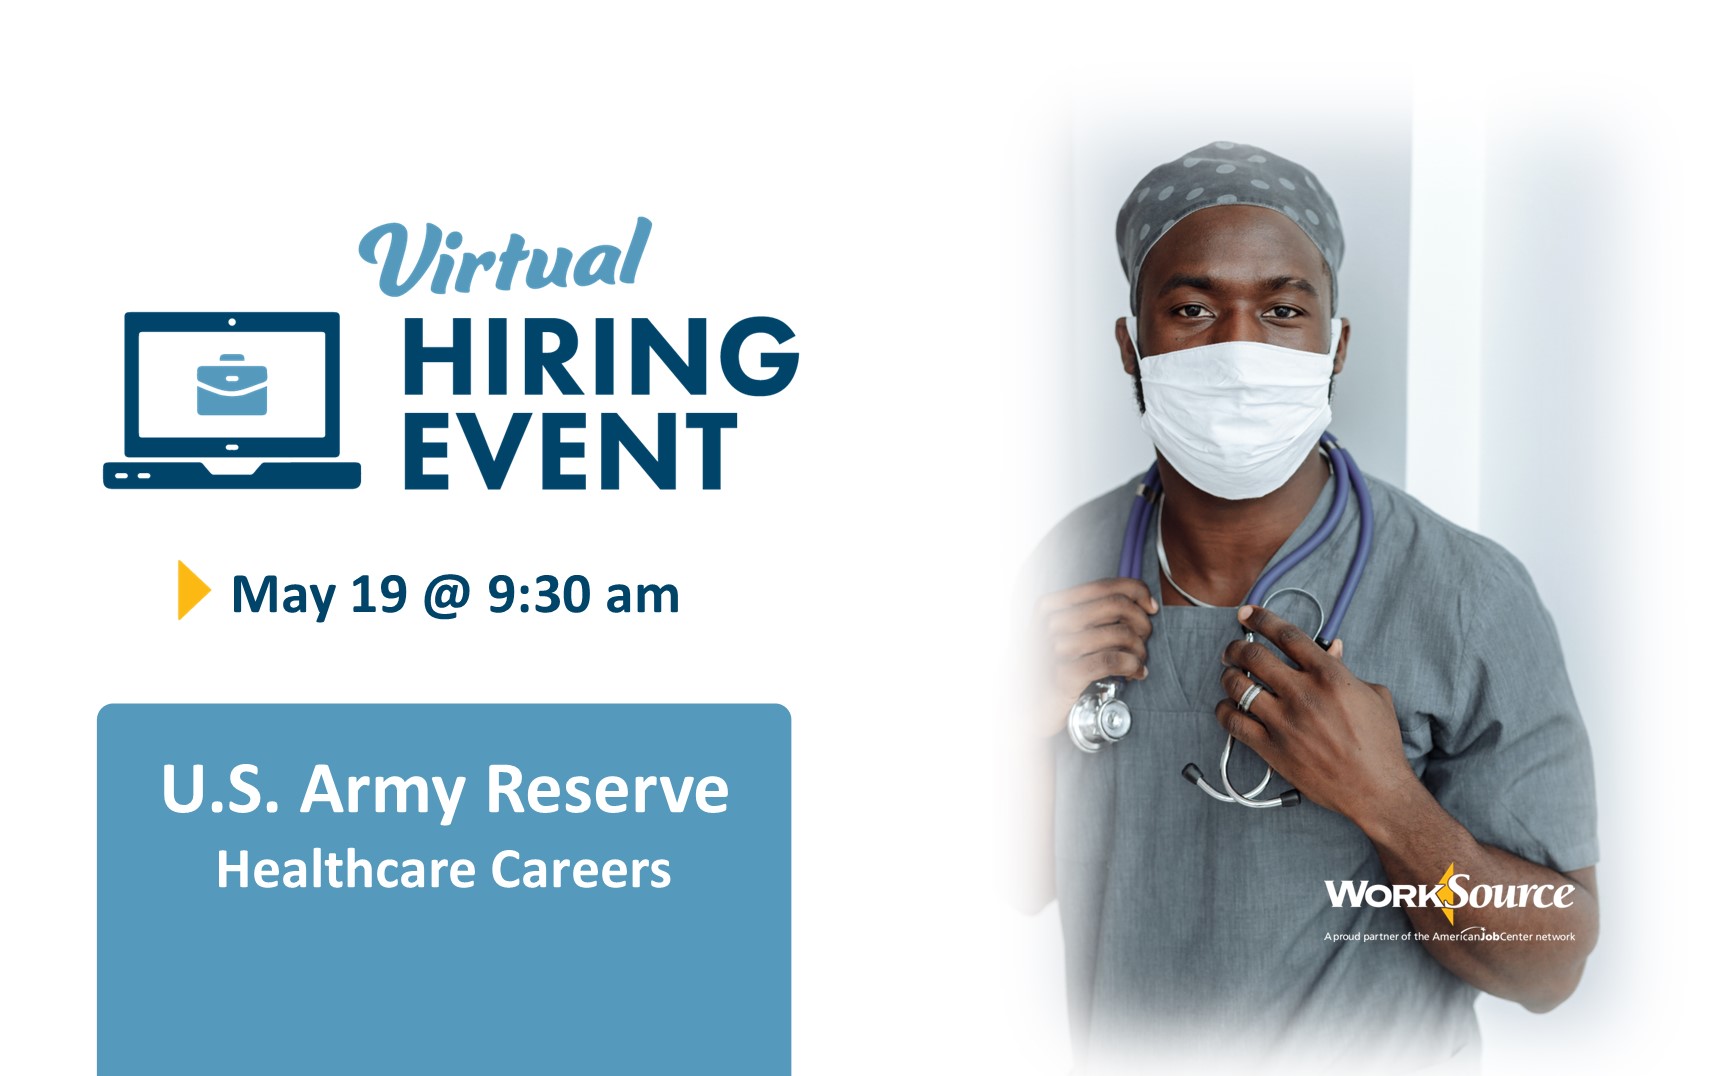 U.S. Army Reserve Virtual Hiring Event - May 19 1